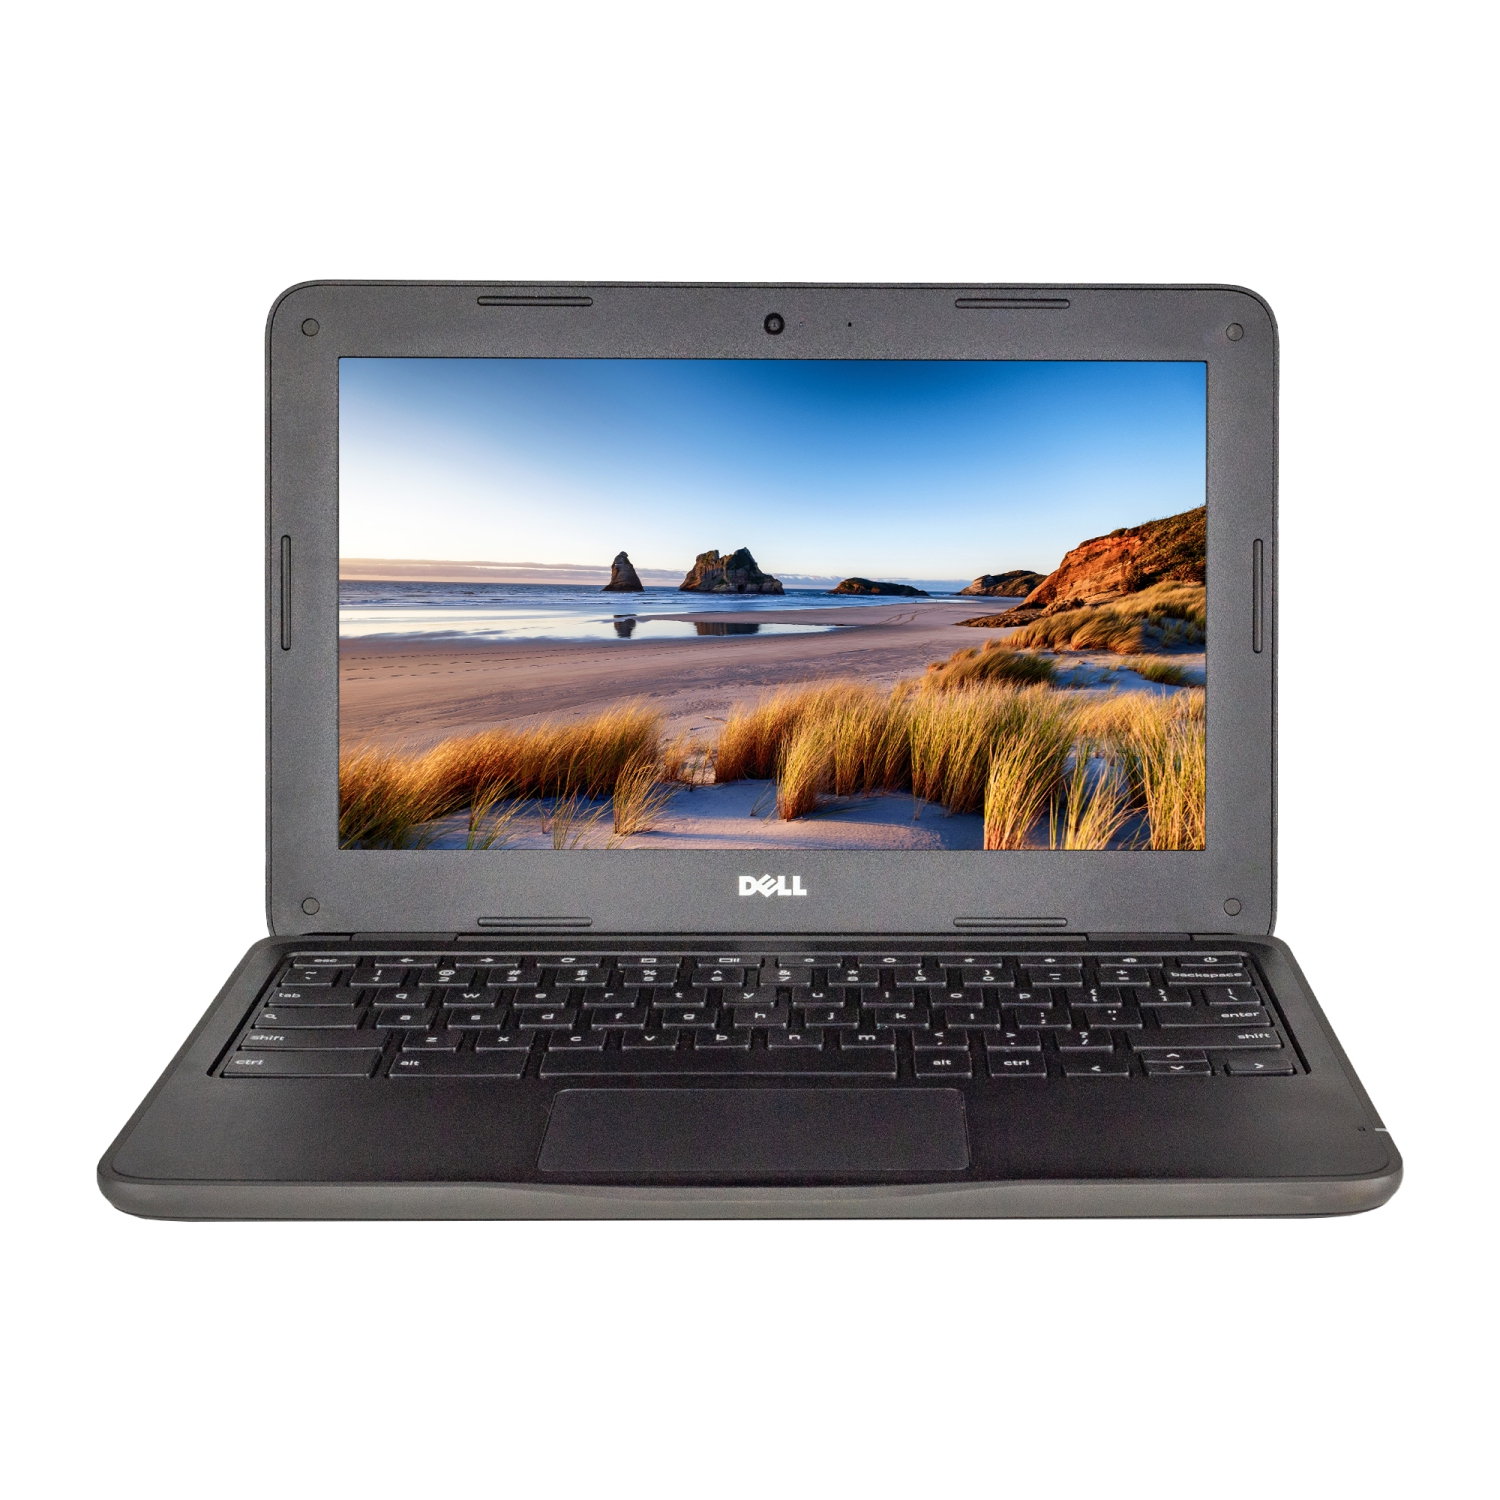 Refurbished (Good) - Dell Chromebook 3180 Laptop PC Intel Dual Core 4GB RAM 16GB SSD Webcam HDMI WiFi